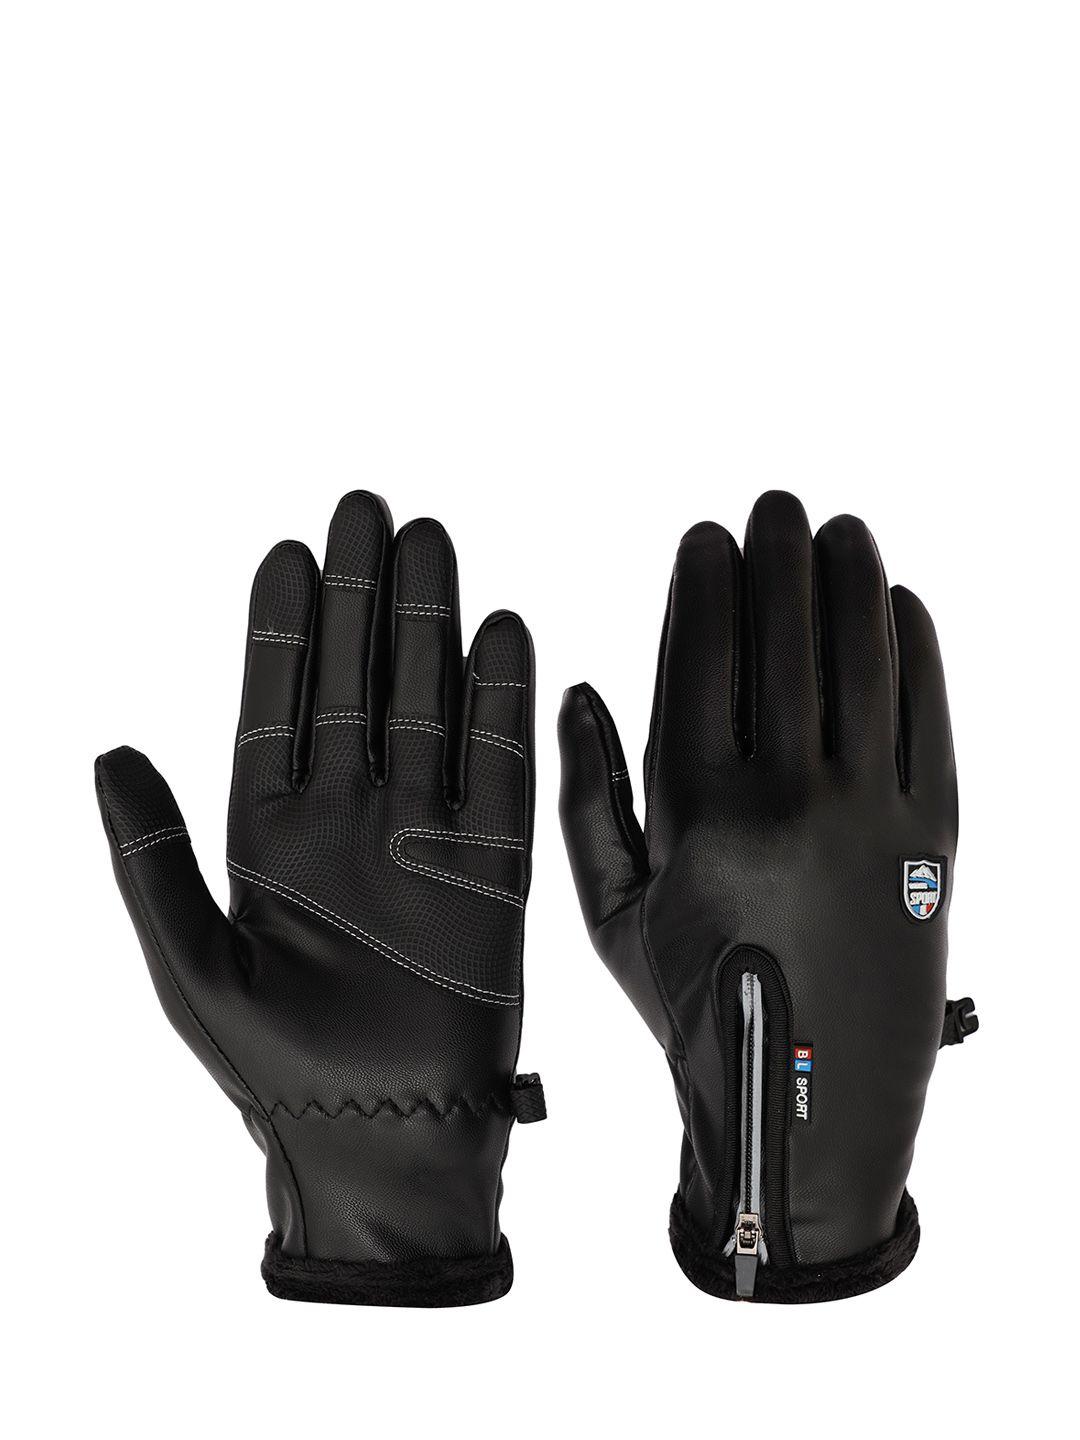 fabseasons unisex black patterned gloves